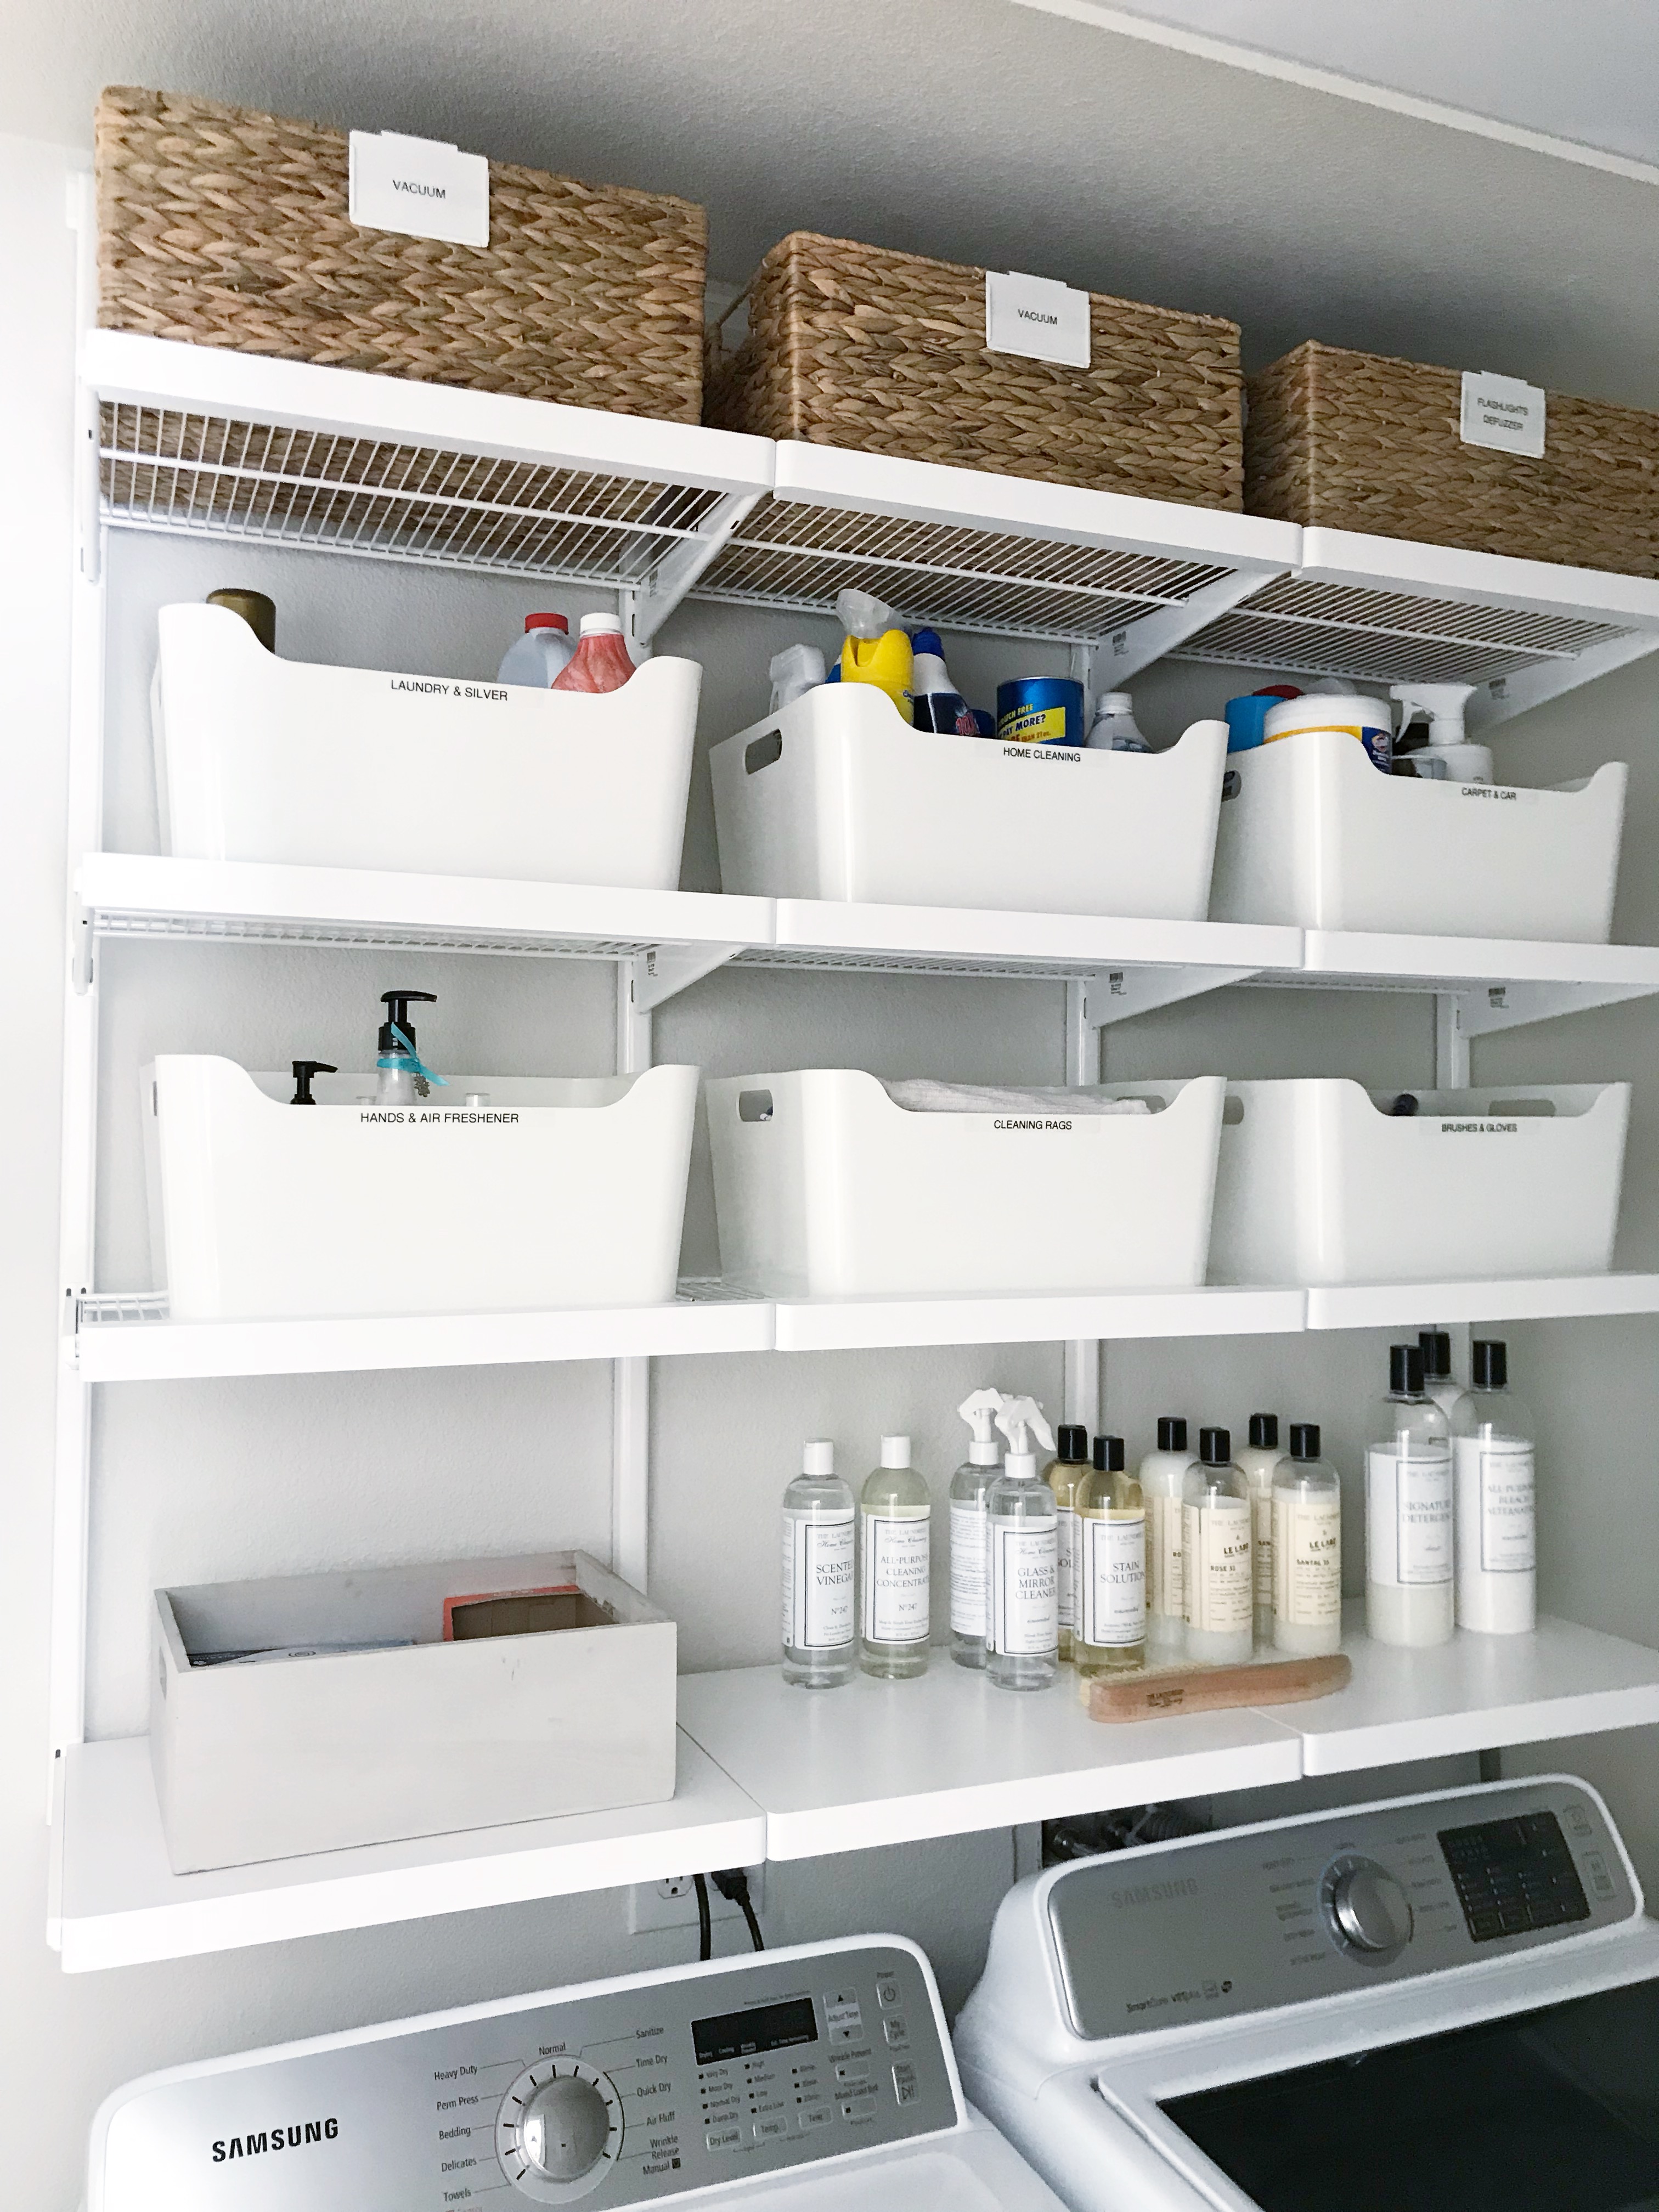 https://simplyorganized.me/wp-content/uploads/2018/07/how-to-organize-laundry-room-shelves.jpg